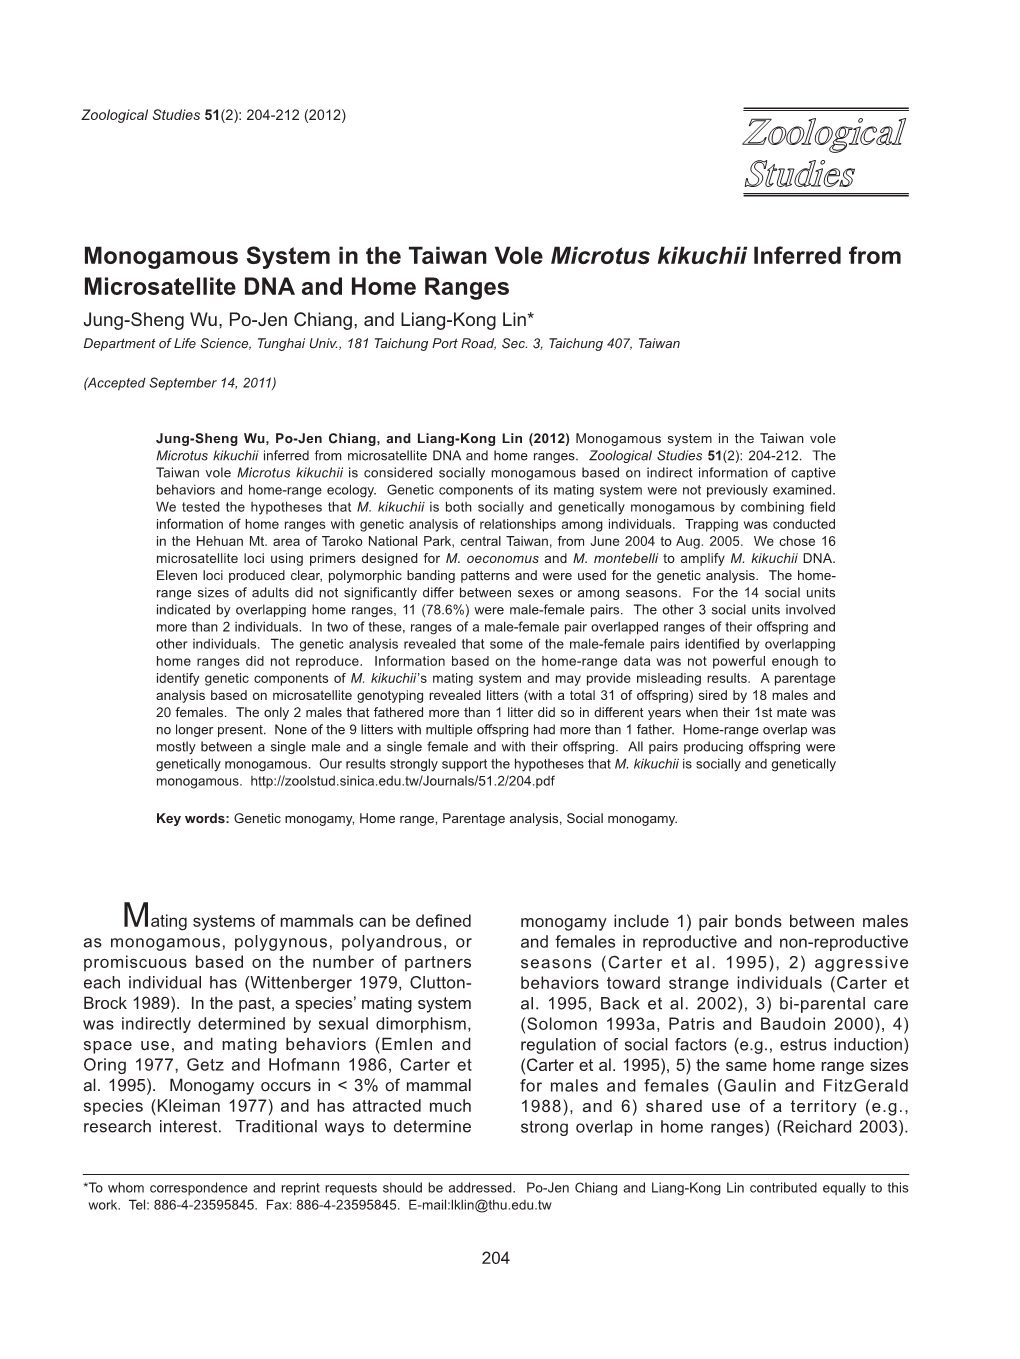 Monogamous System in the Taiwan Vole Microtus Kikuchii Inferred From